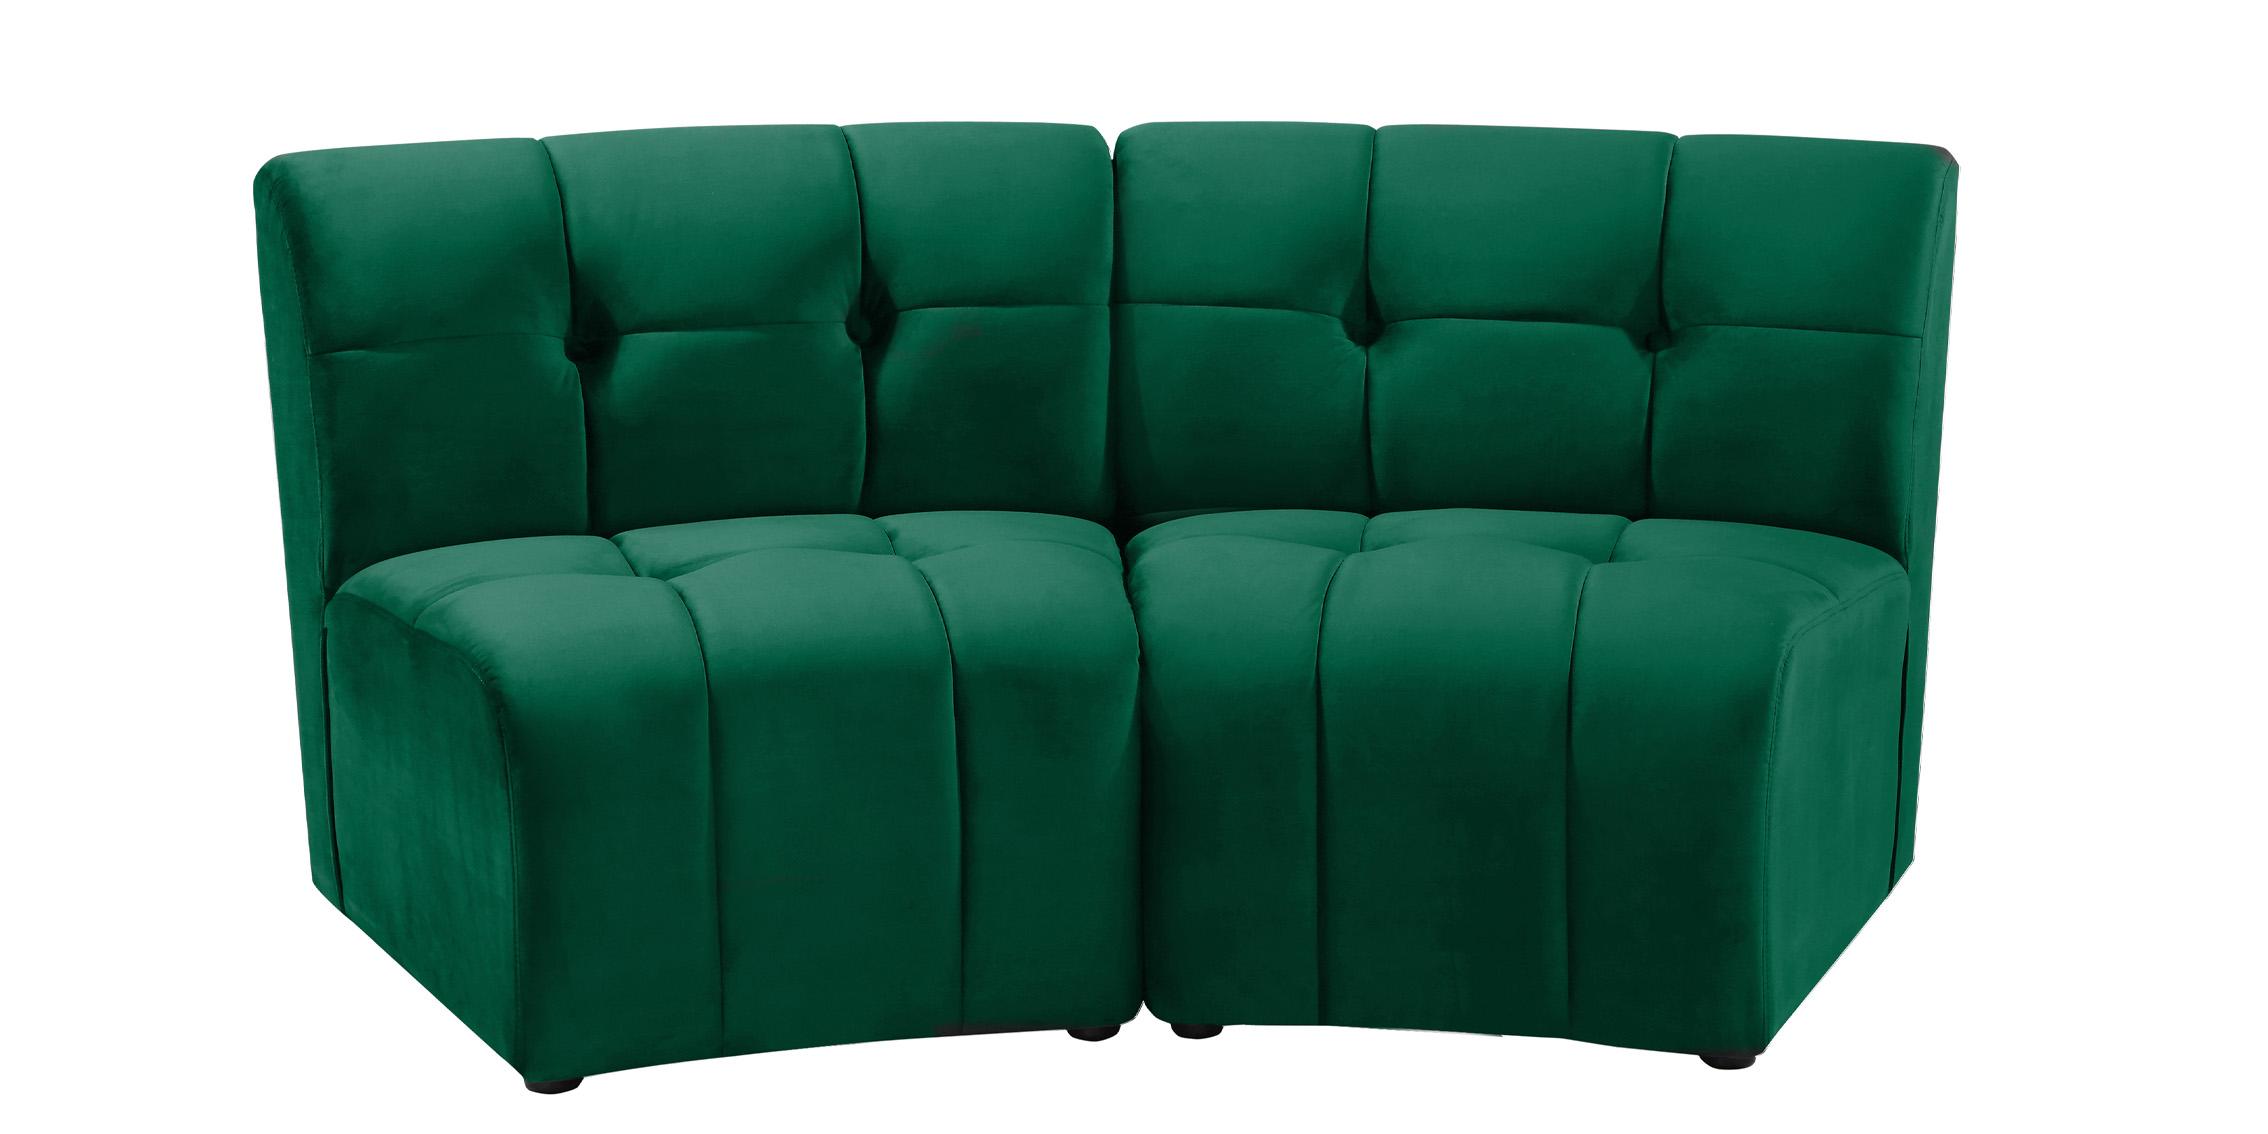 Contemporary, Modern Modular Sectional Sofa LIMITLESS 645Green-2PC 645Green-2PC in Green Velvet